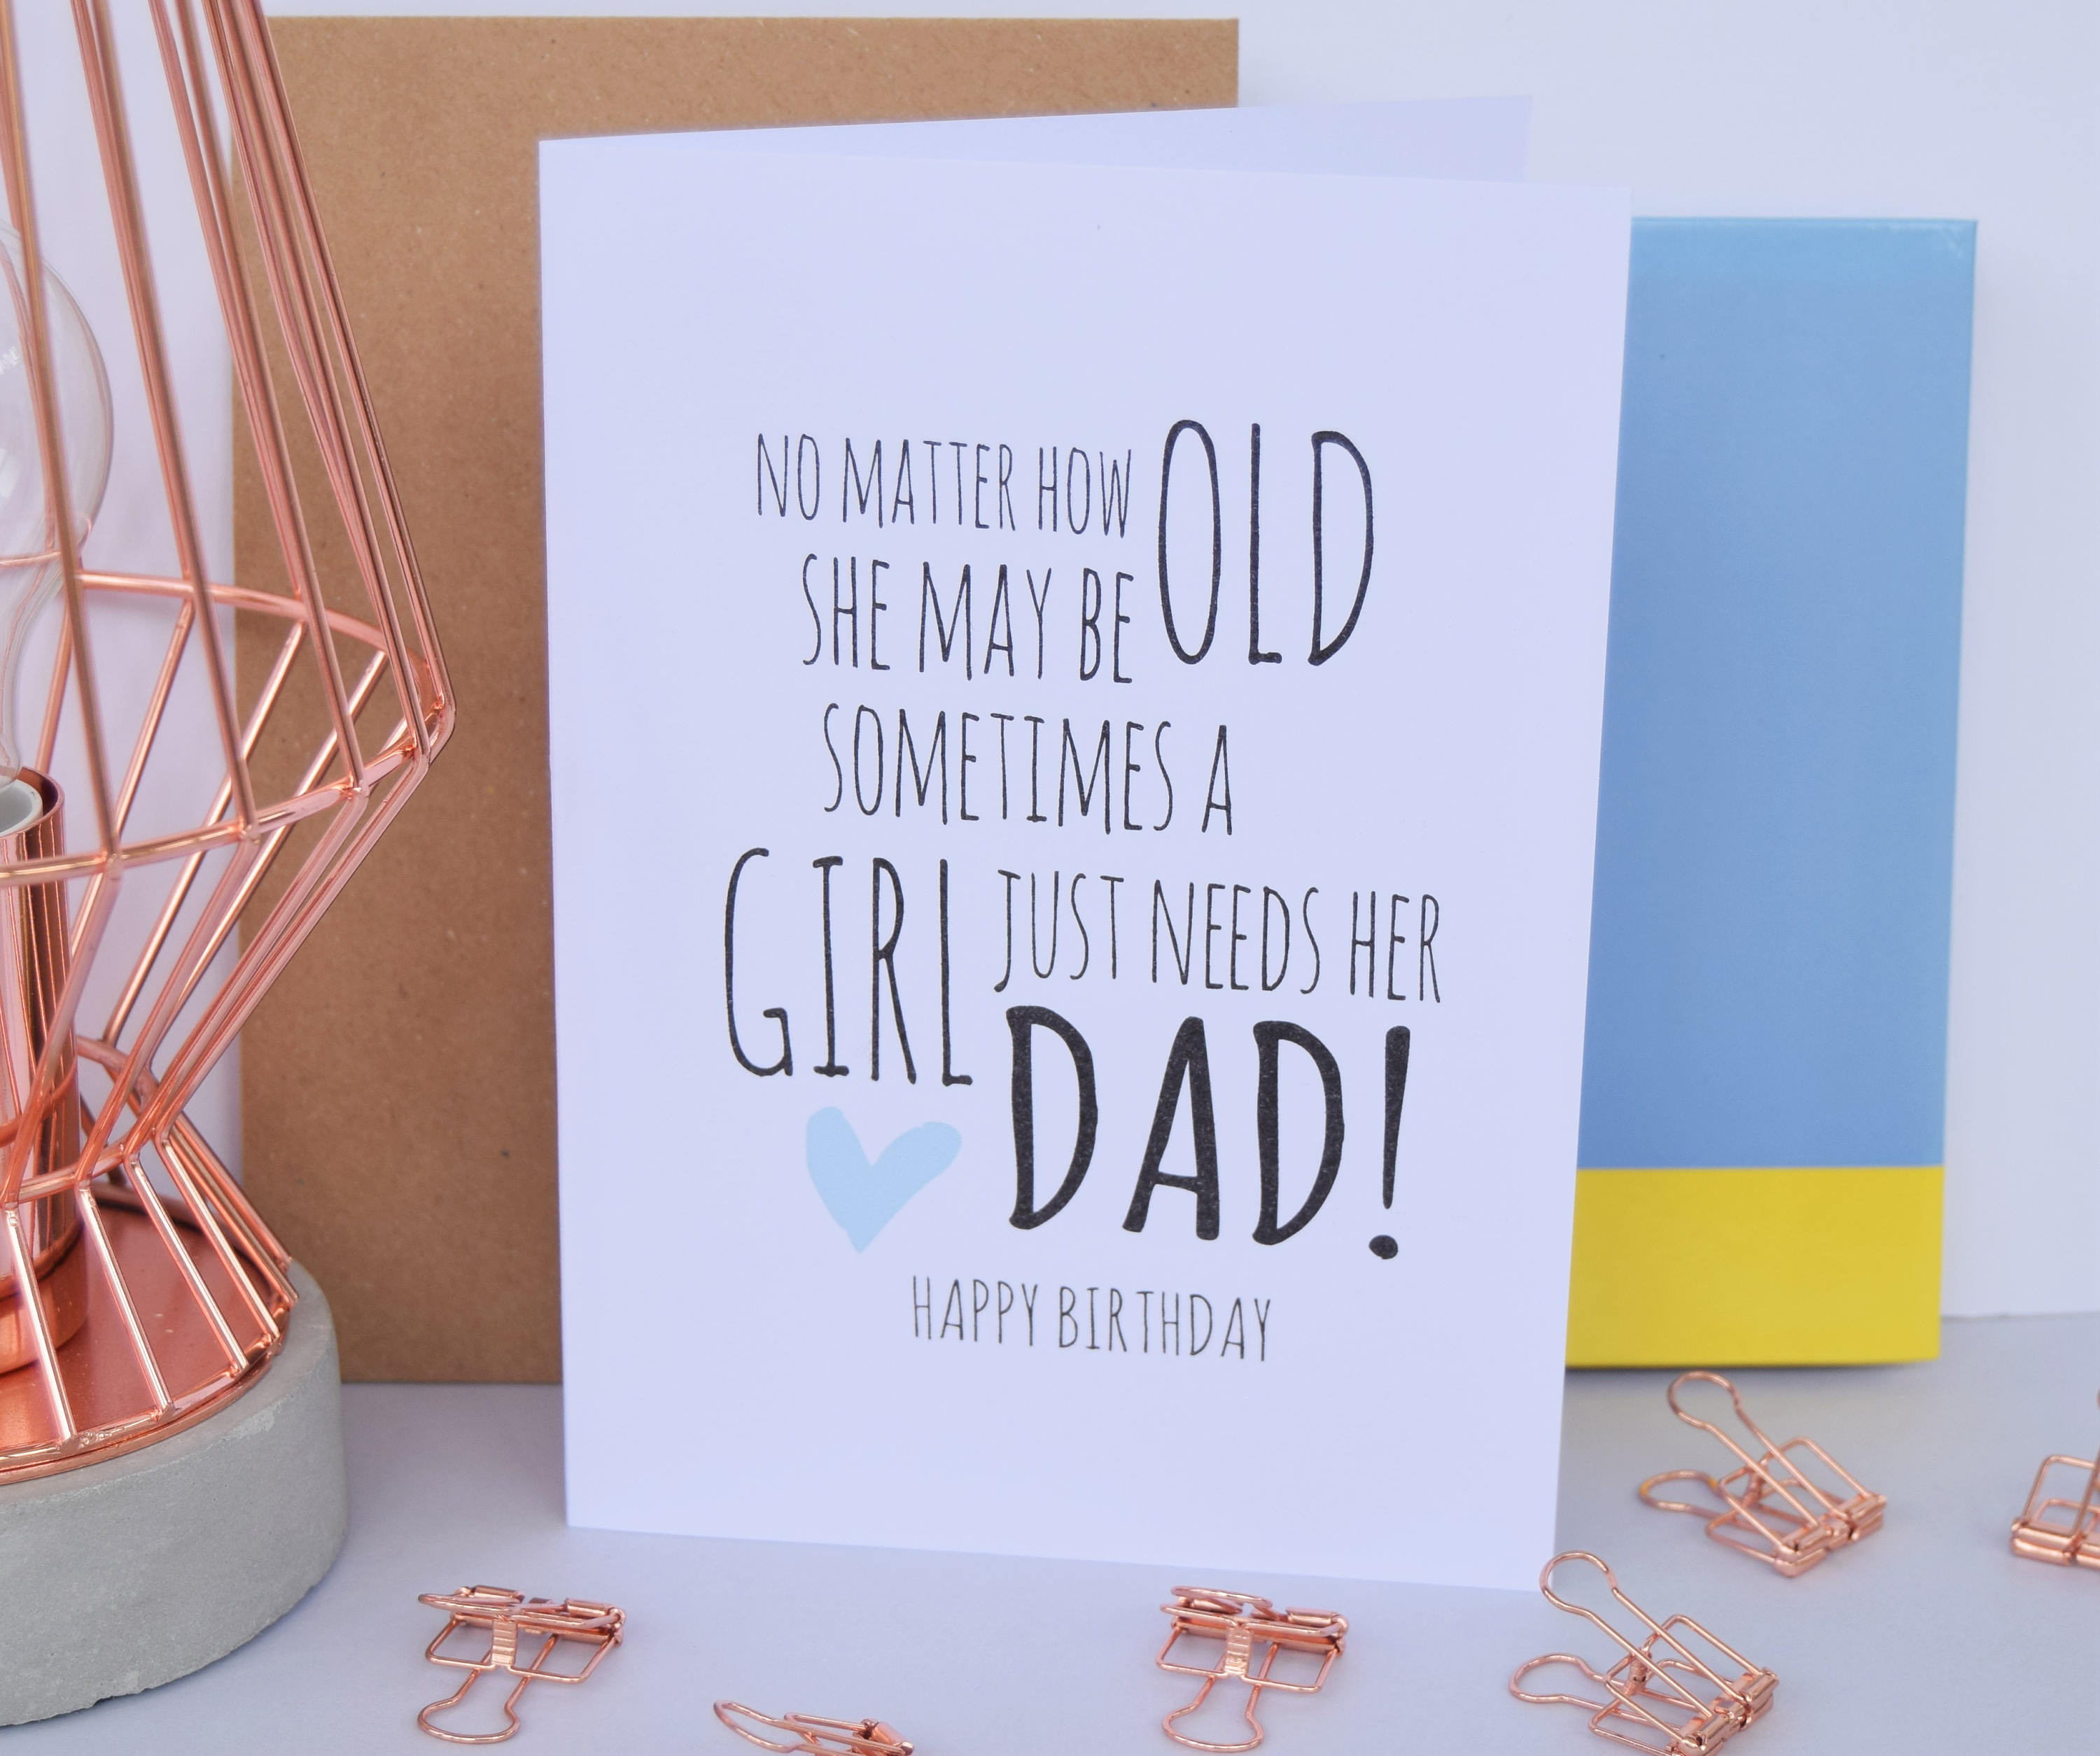 Dad Birthday Card Ideas Top 20 Dad Birthday Card Ideas Home Inspiration And Diy Crafts Ideas